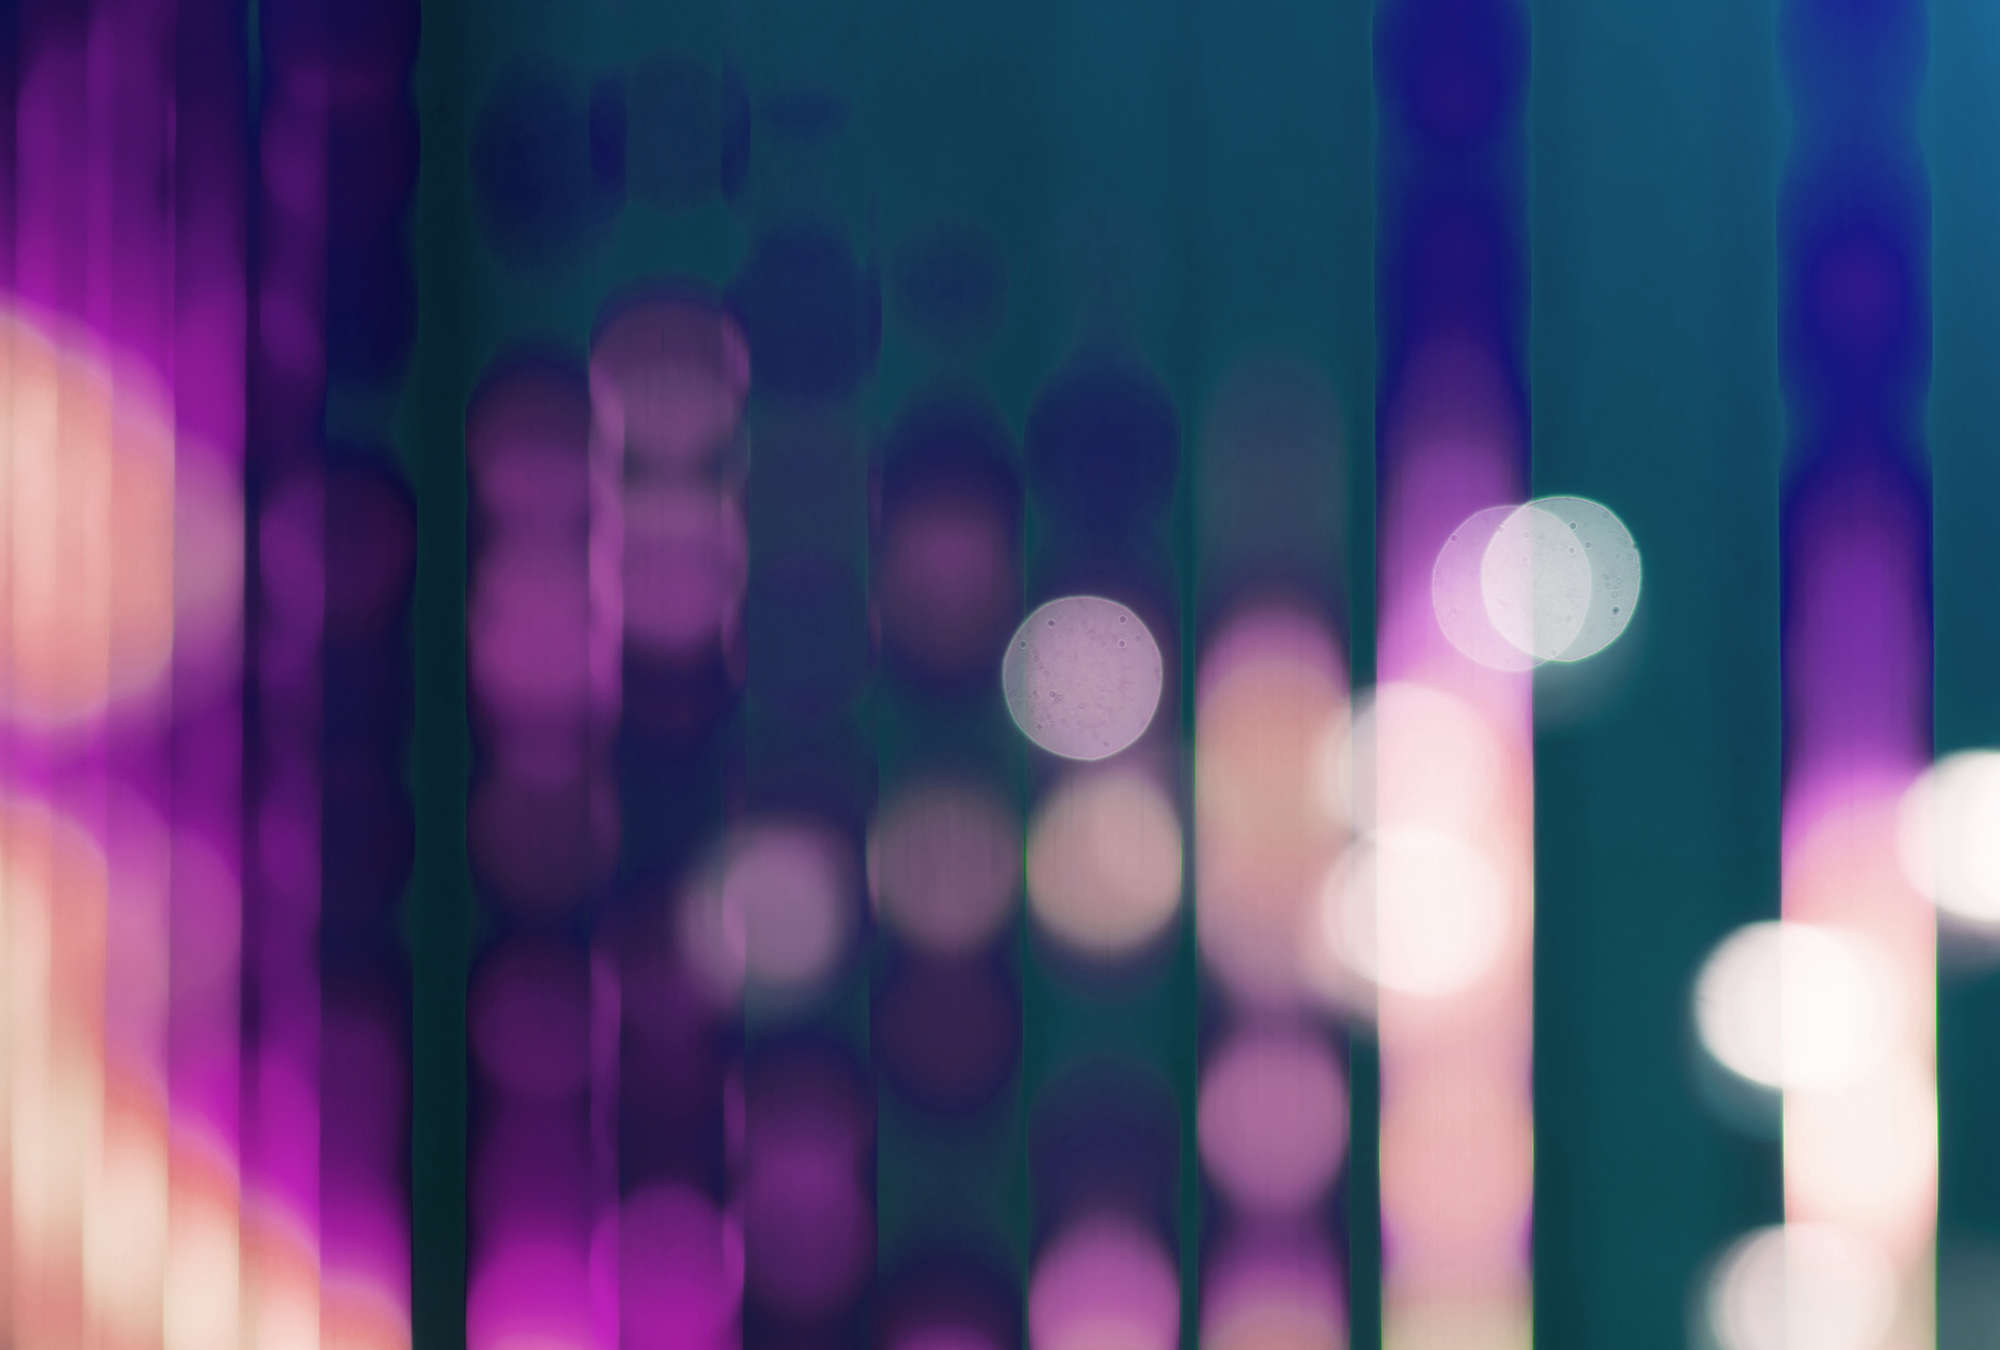             Big City Lights 3 - Carta da parati fotografica con riflessi di luce in viola - Blu, Viola | Materiali non tessuto liscio opaco
        